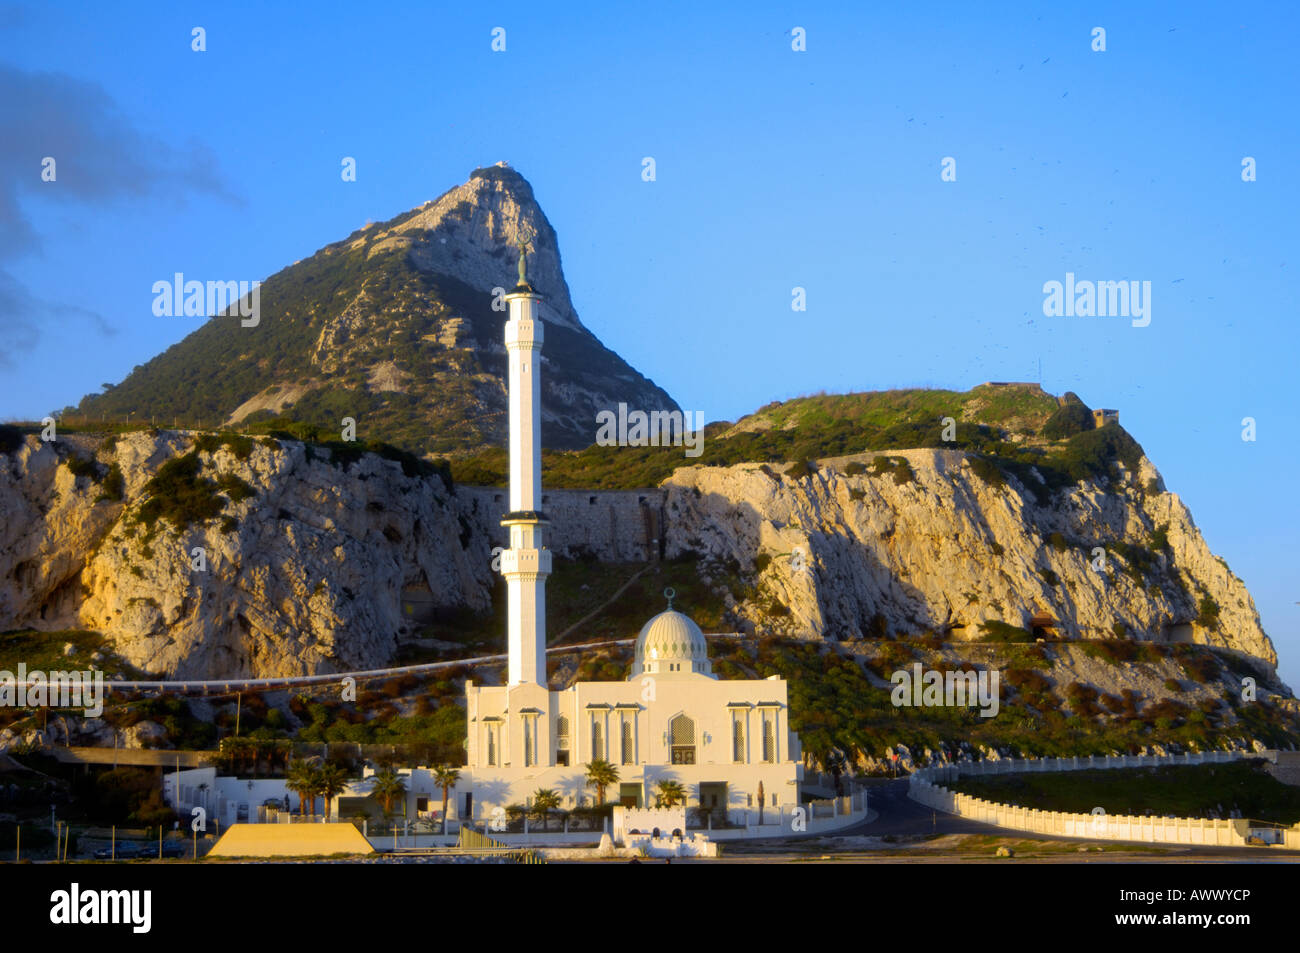 Ibrahim Al-Ibrahim Mosque on the Rock of Gibraltar Stock Photo